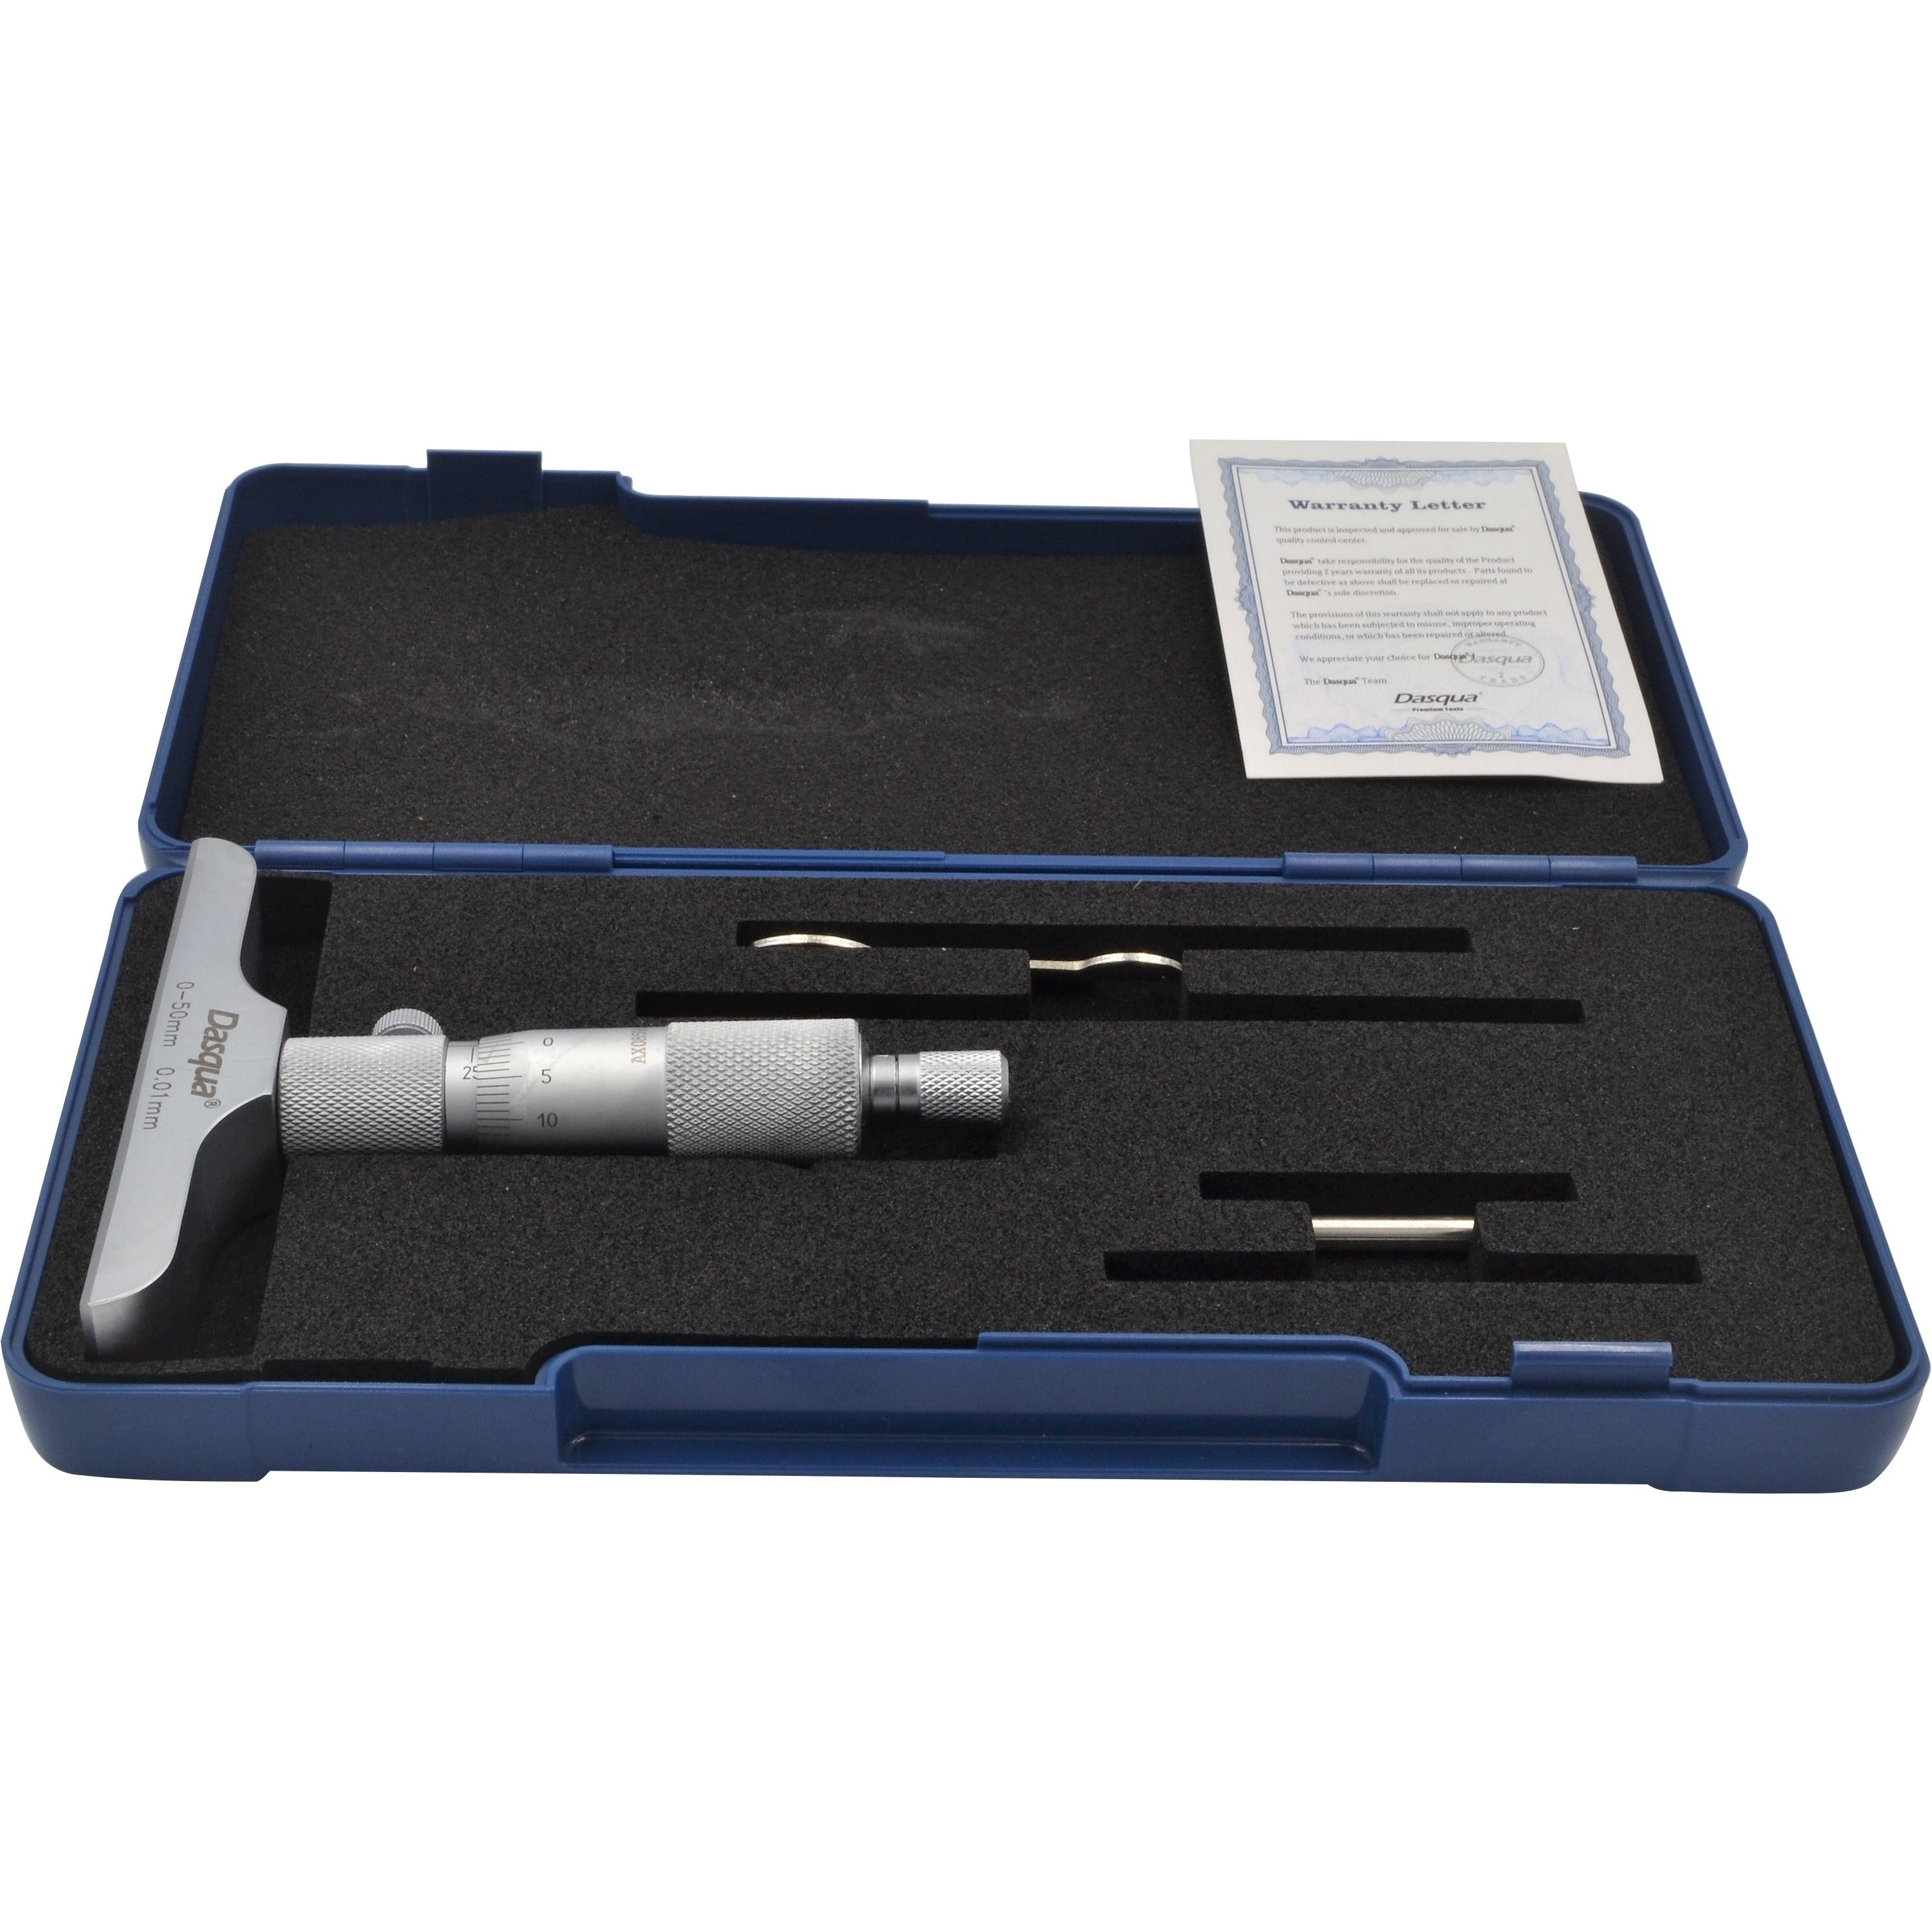 Dasqua Depth Micrometer 0 - 50 mm Series 4611-8110